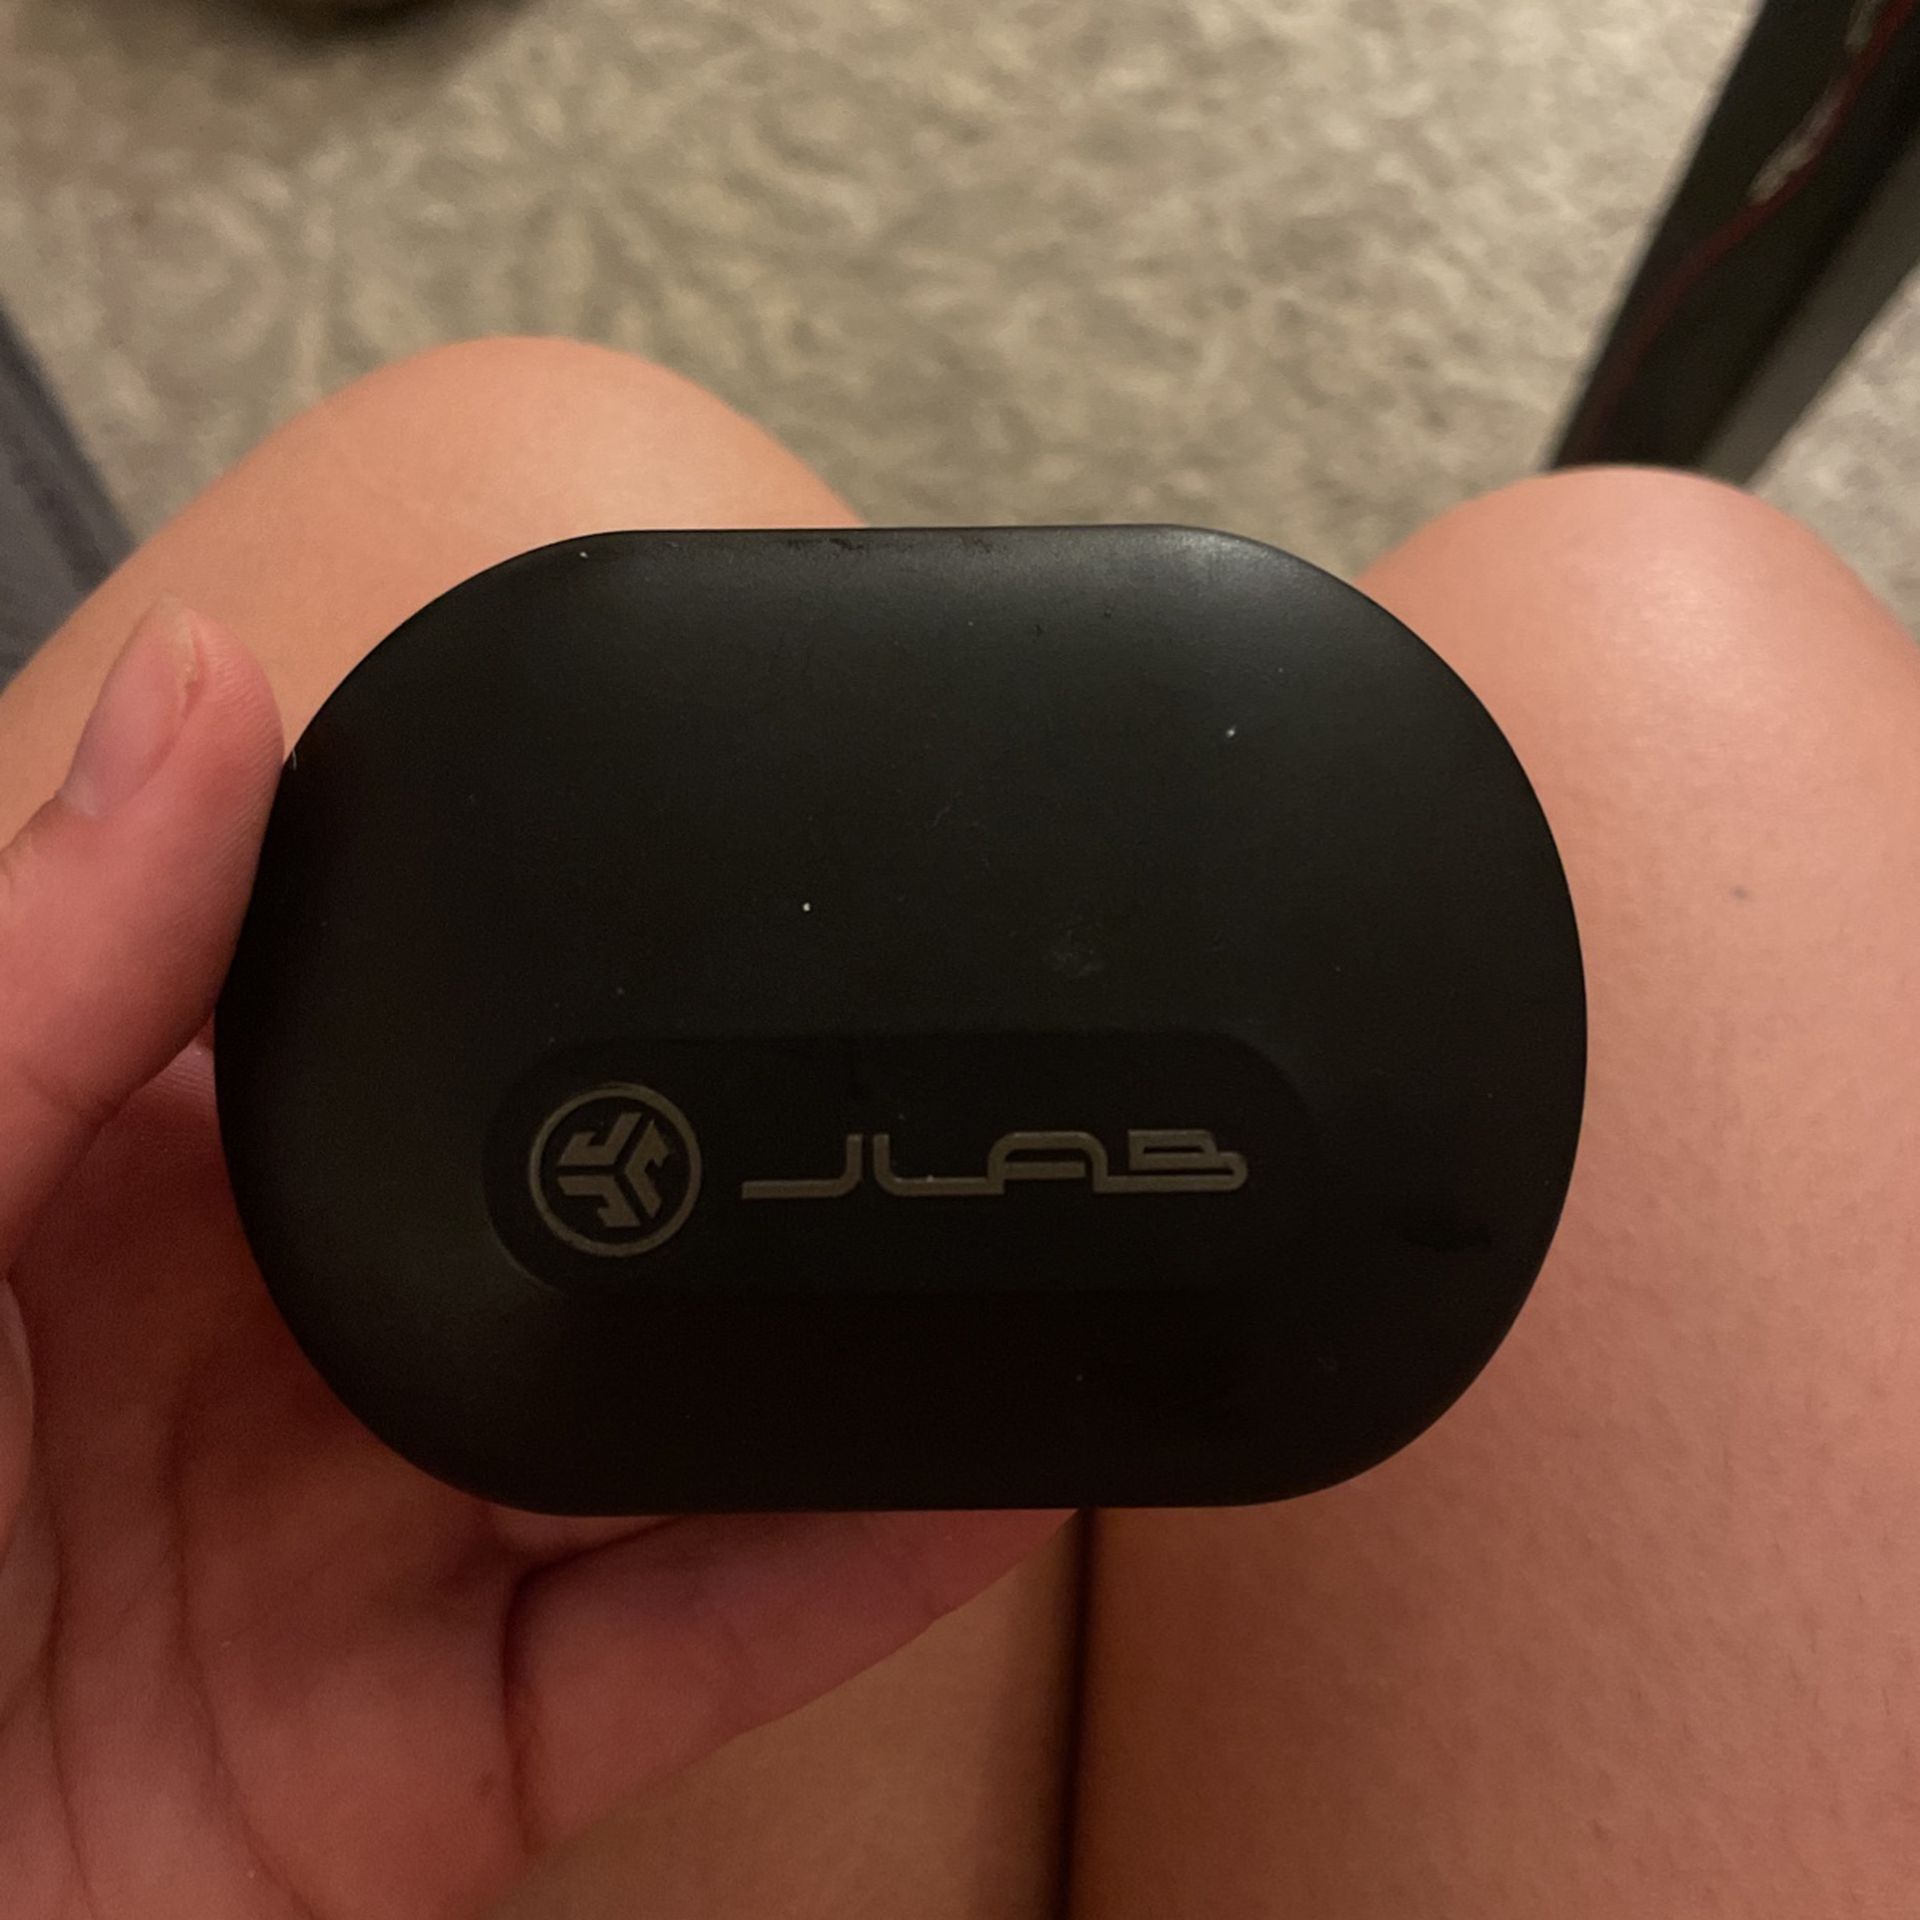 JLAB running wireless headphones